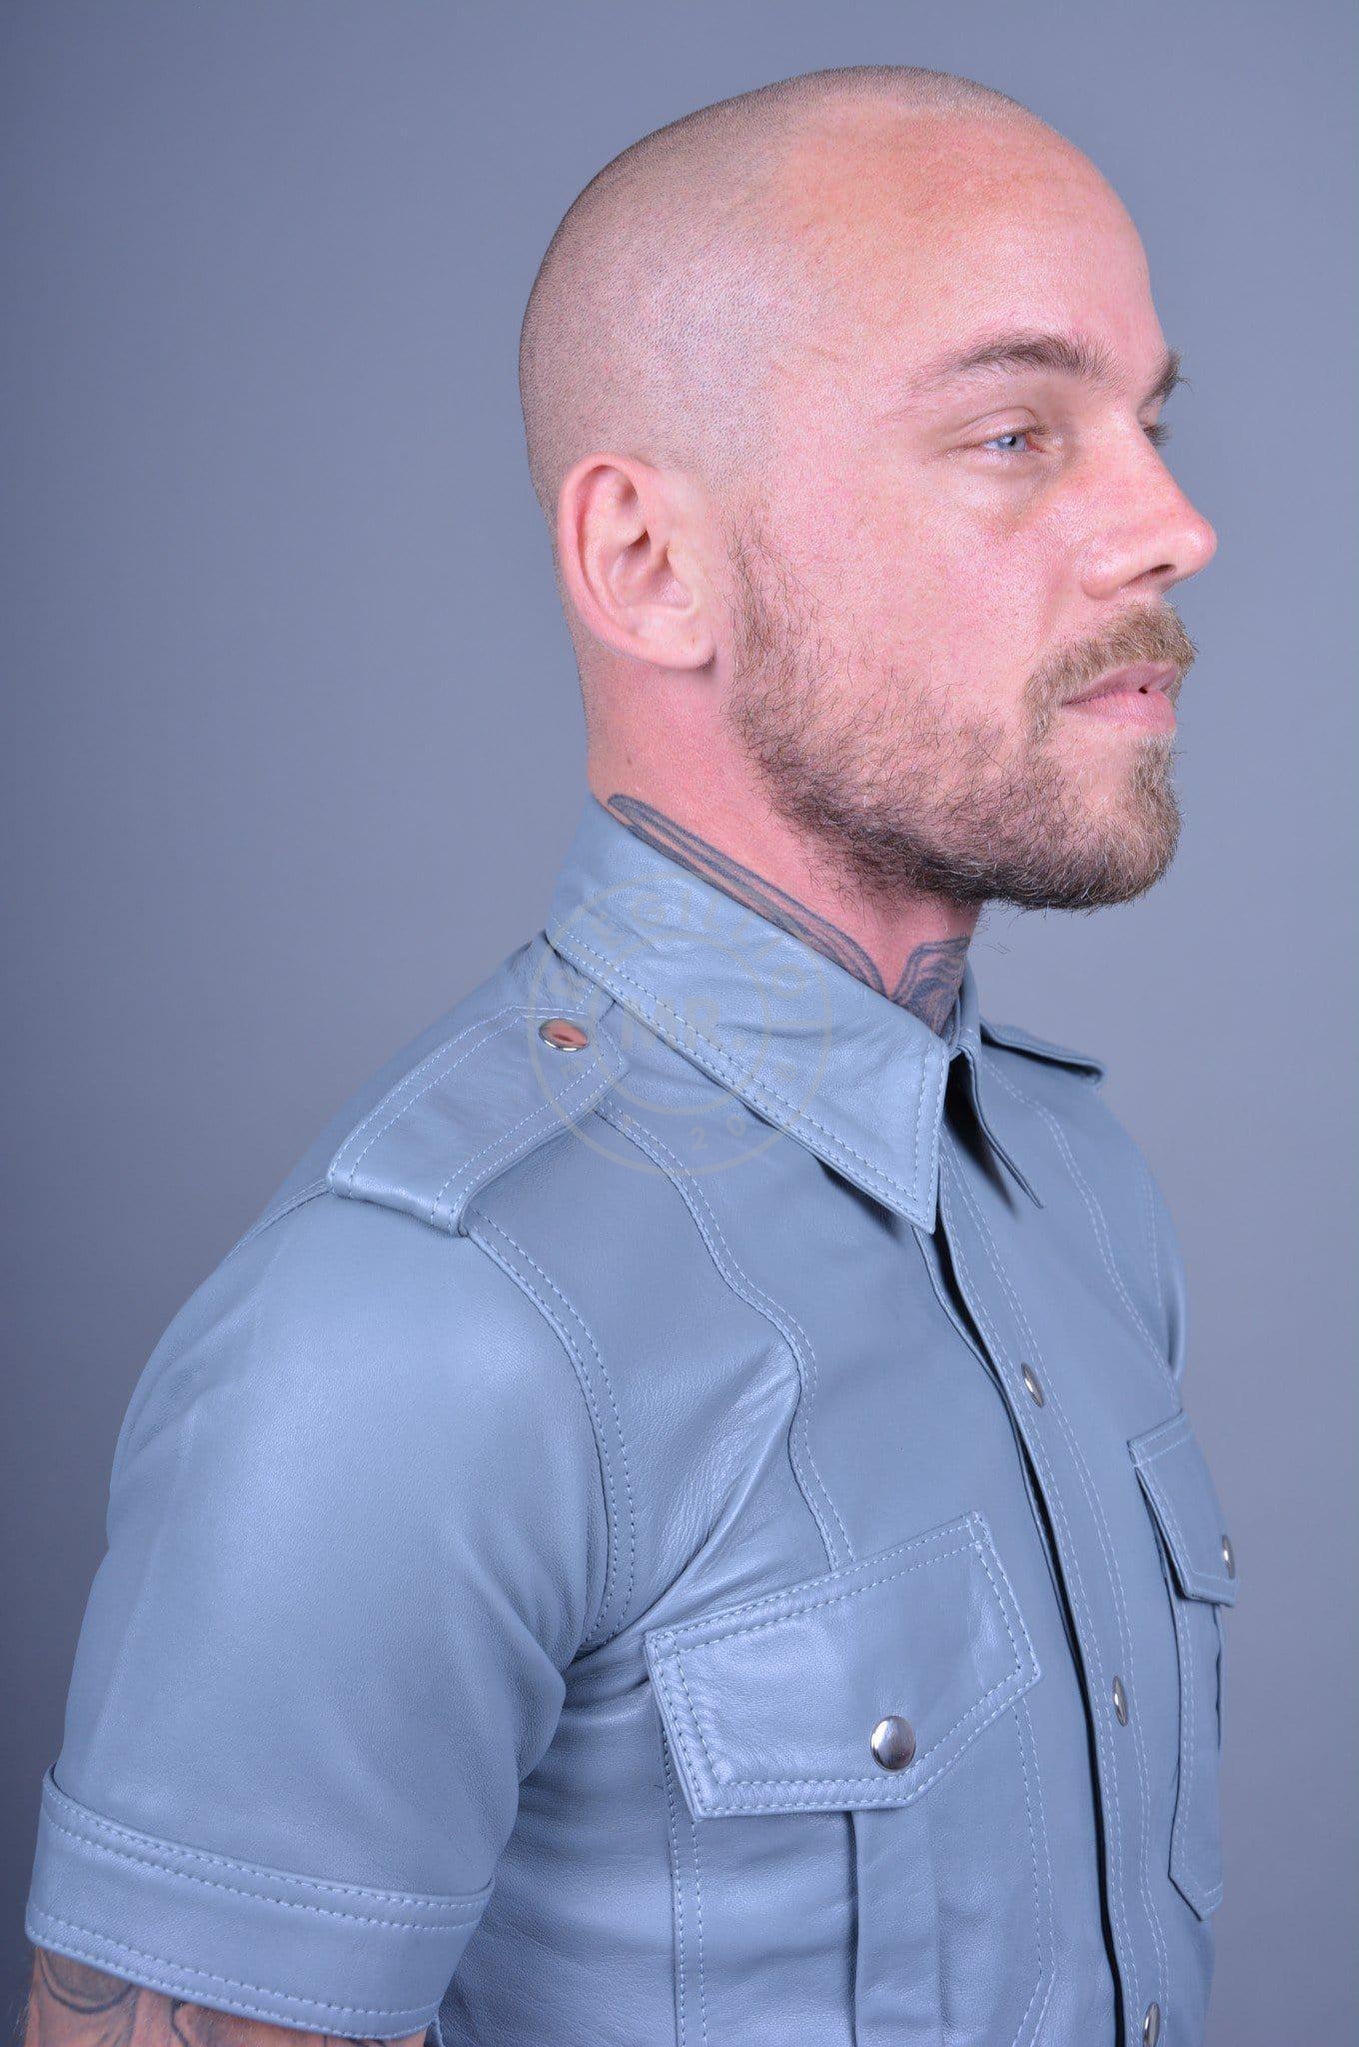 Slate Grey Leather Shirt-at MR. Riegillio